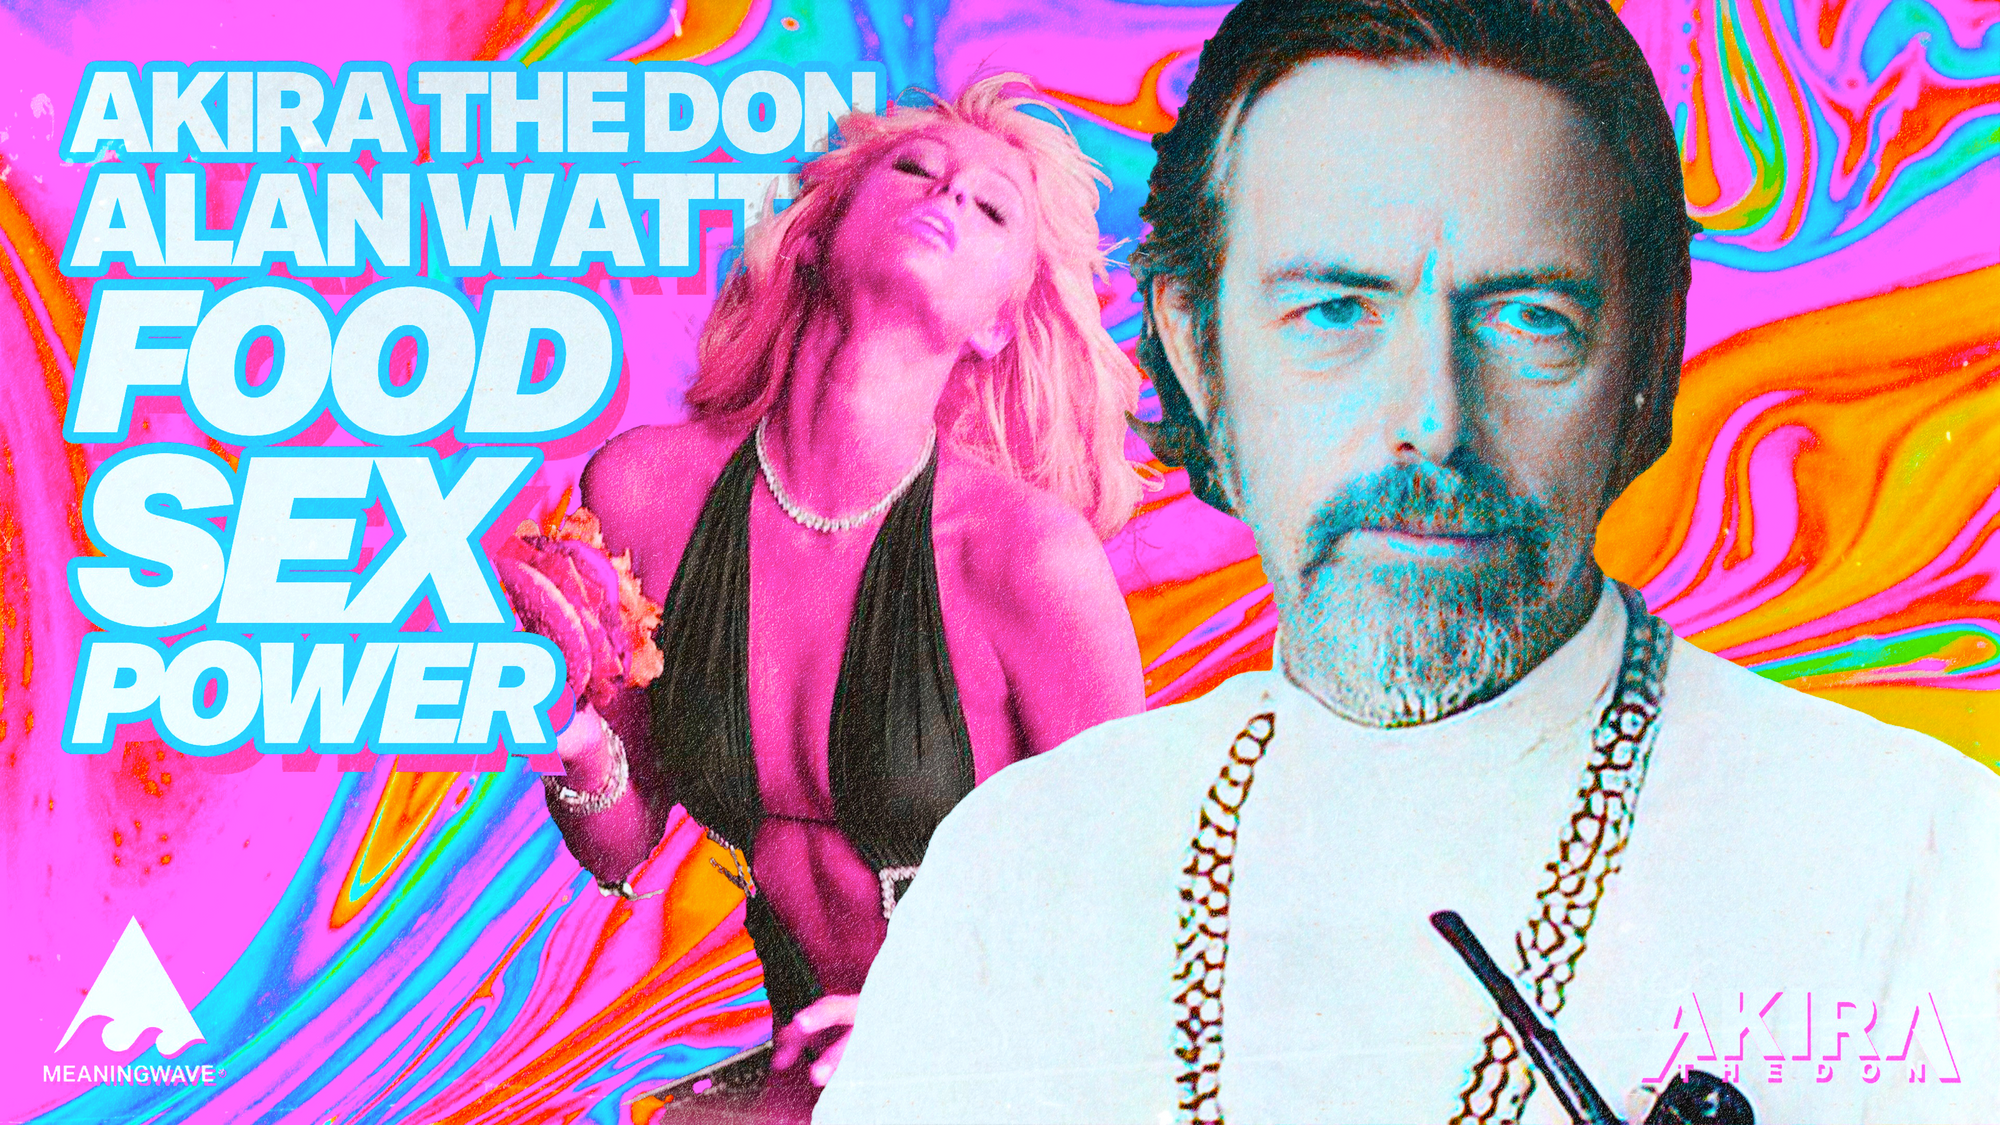 Alan Watts & Akira The Don - FOOD SEX POWER | Music Video | WATTSWAVE